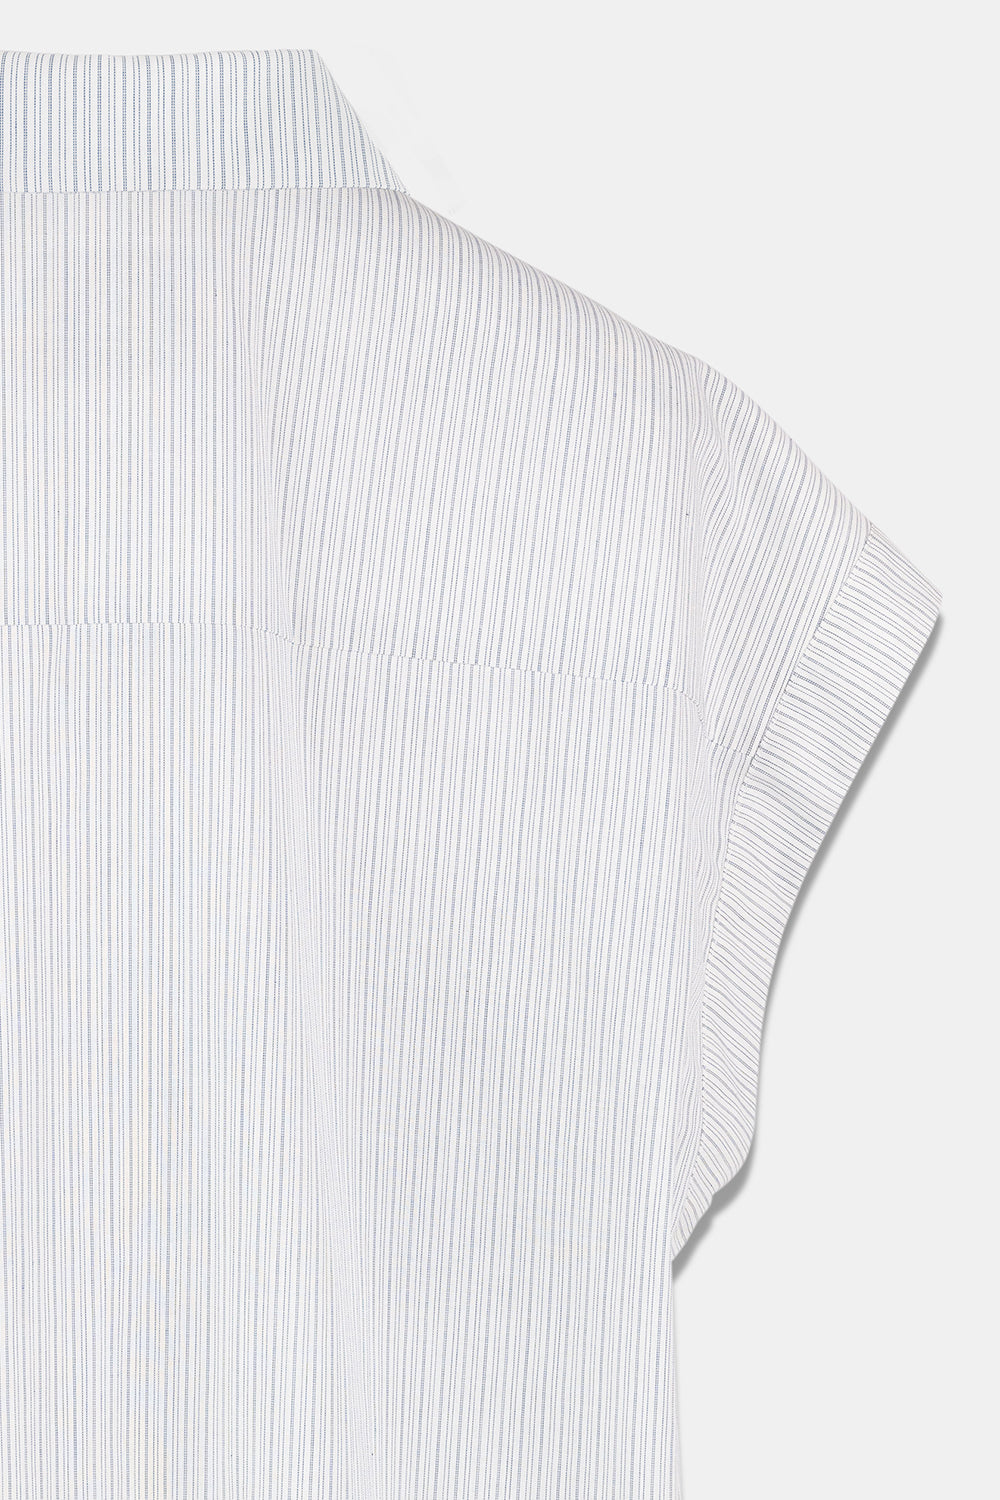 SEANNUNG - MEN - Striped Pattern Raglan Sleeve Shirt 條紋連袖襯衫